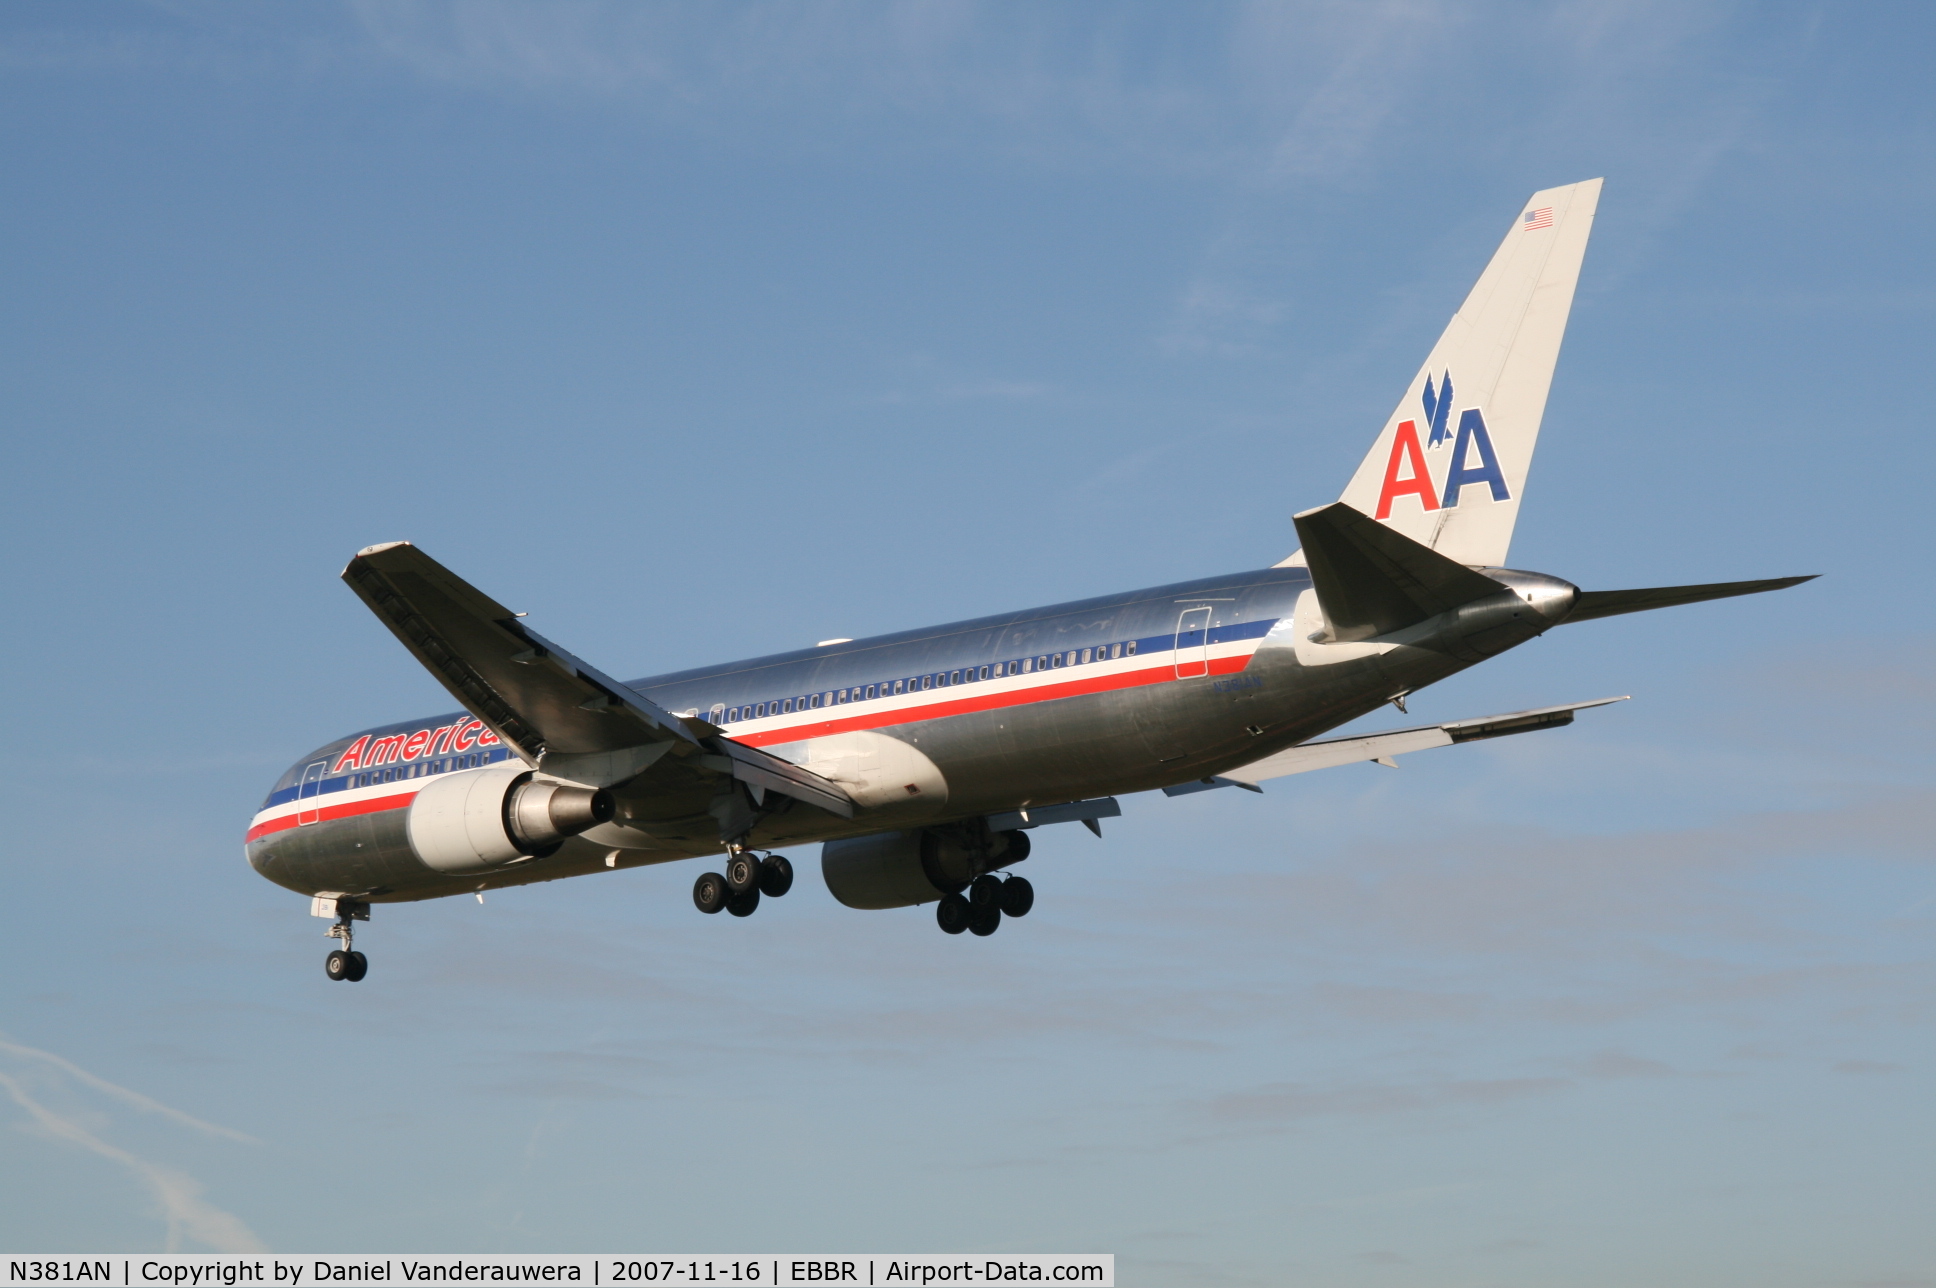 N381AN, 1993 Boeing 767-323 C/N 25450, flight AA172 is descending to rwy 25L